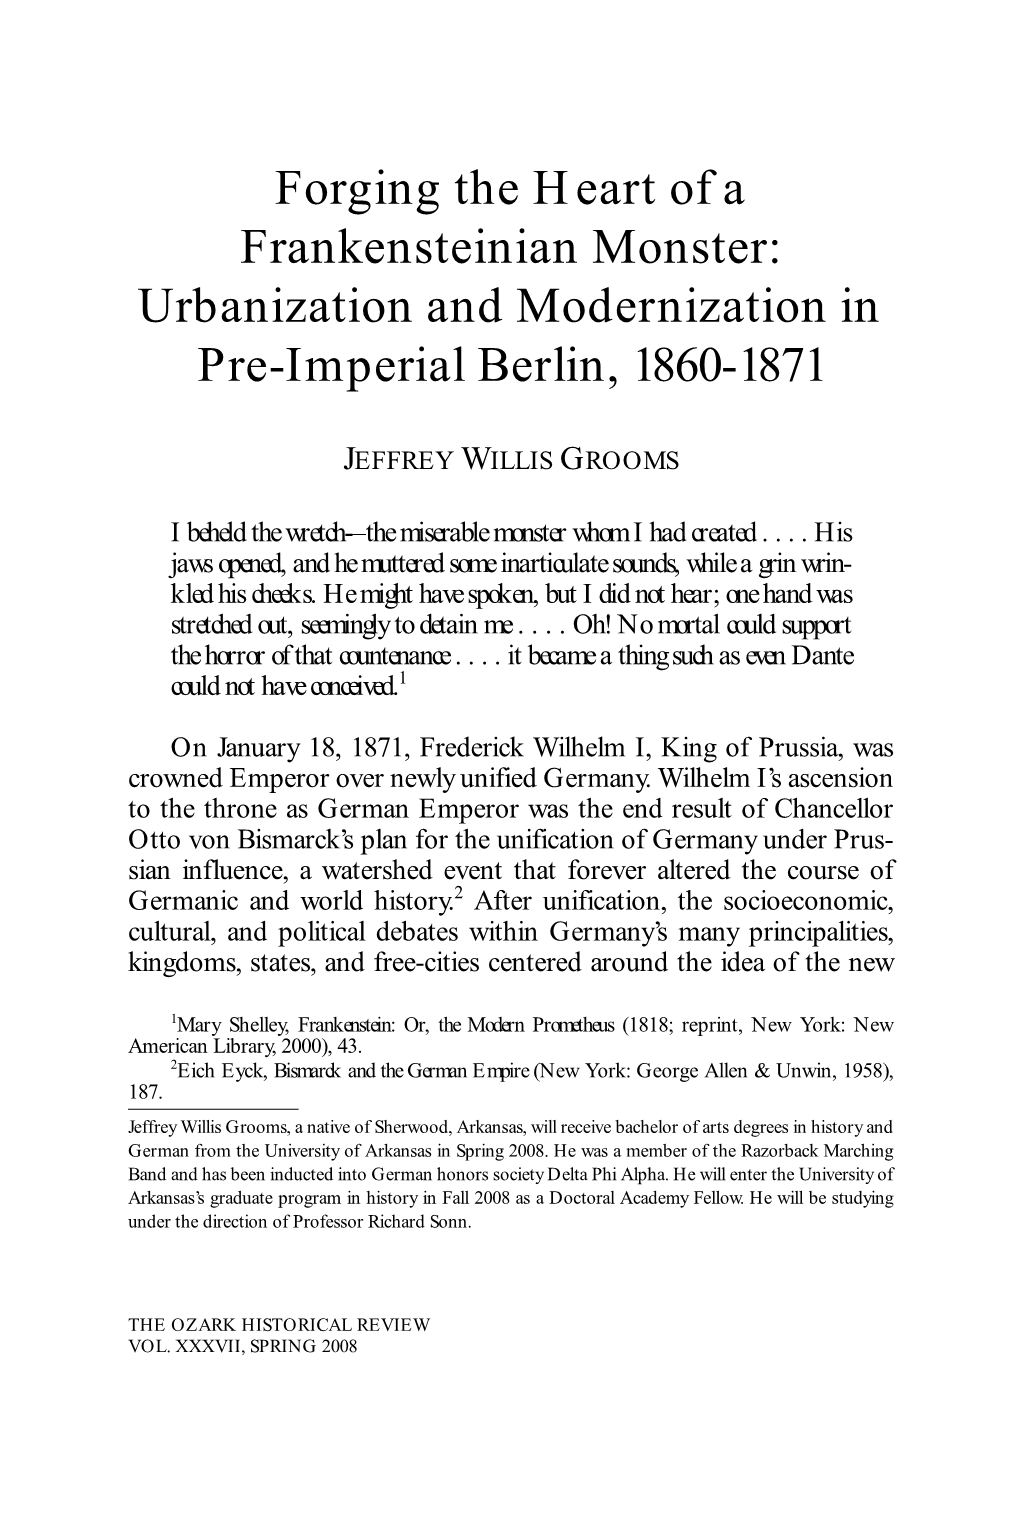 Urbanization and Modernization in Pre-Imperial Berlin, 1860-1871